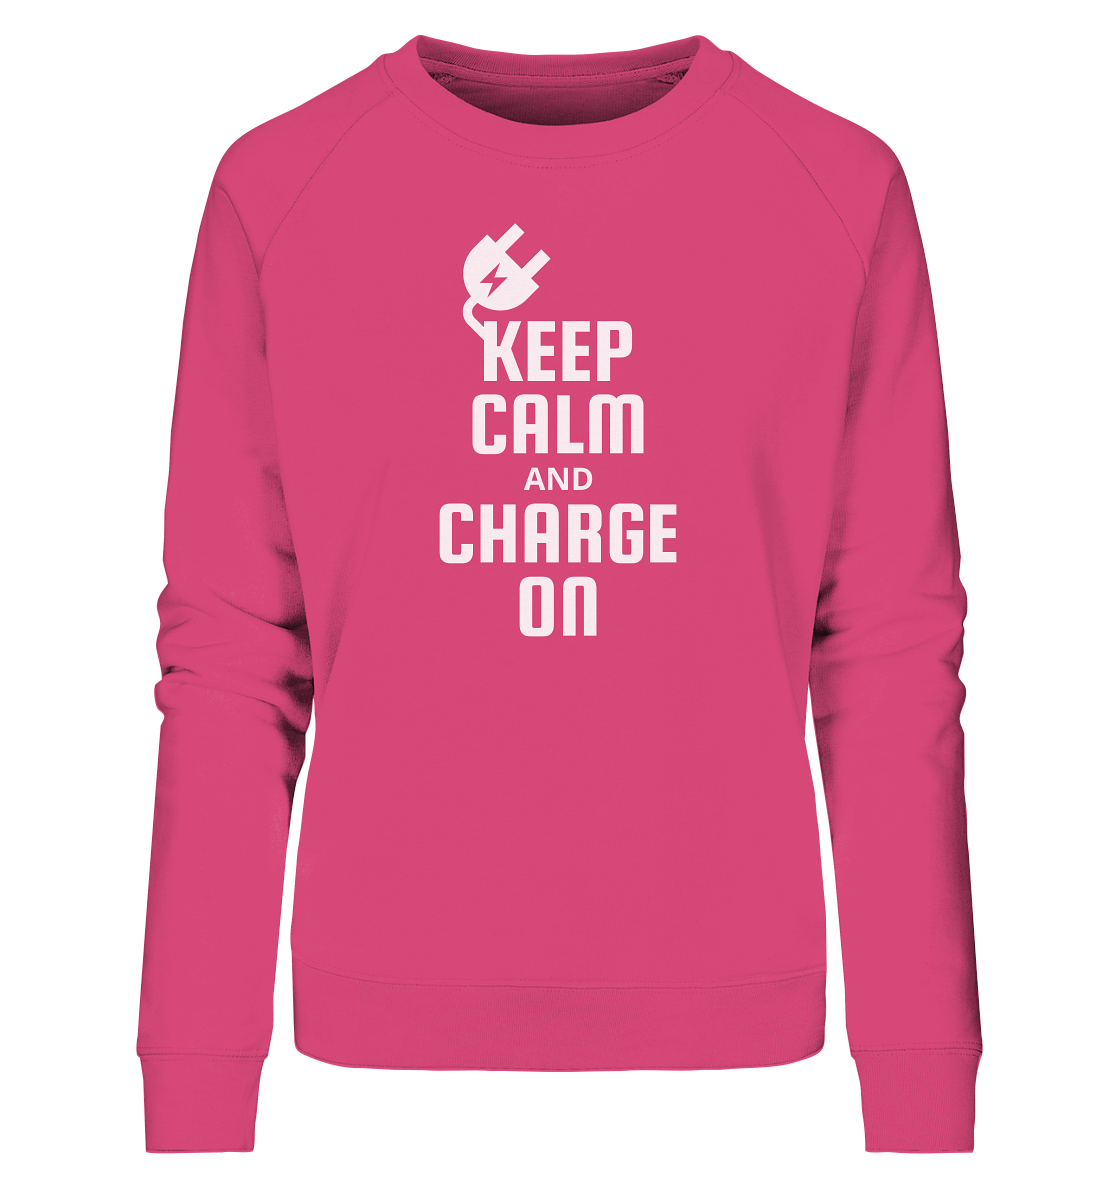 Charge on ORGANIC - Ladies Organic Sweatshirt